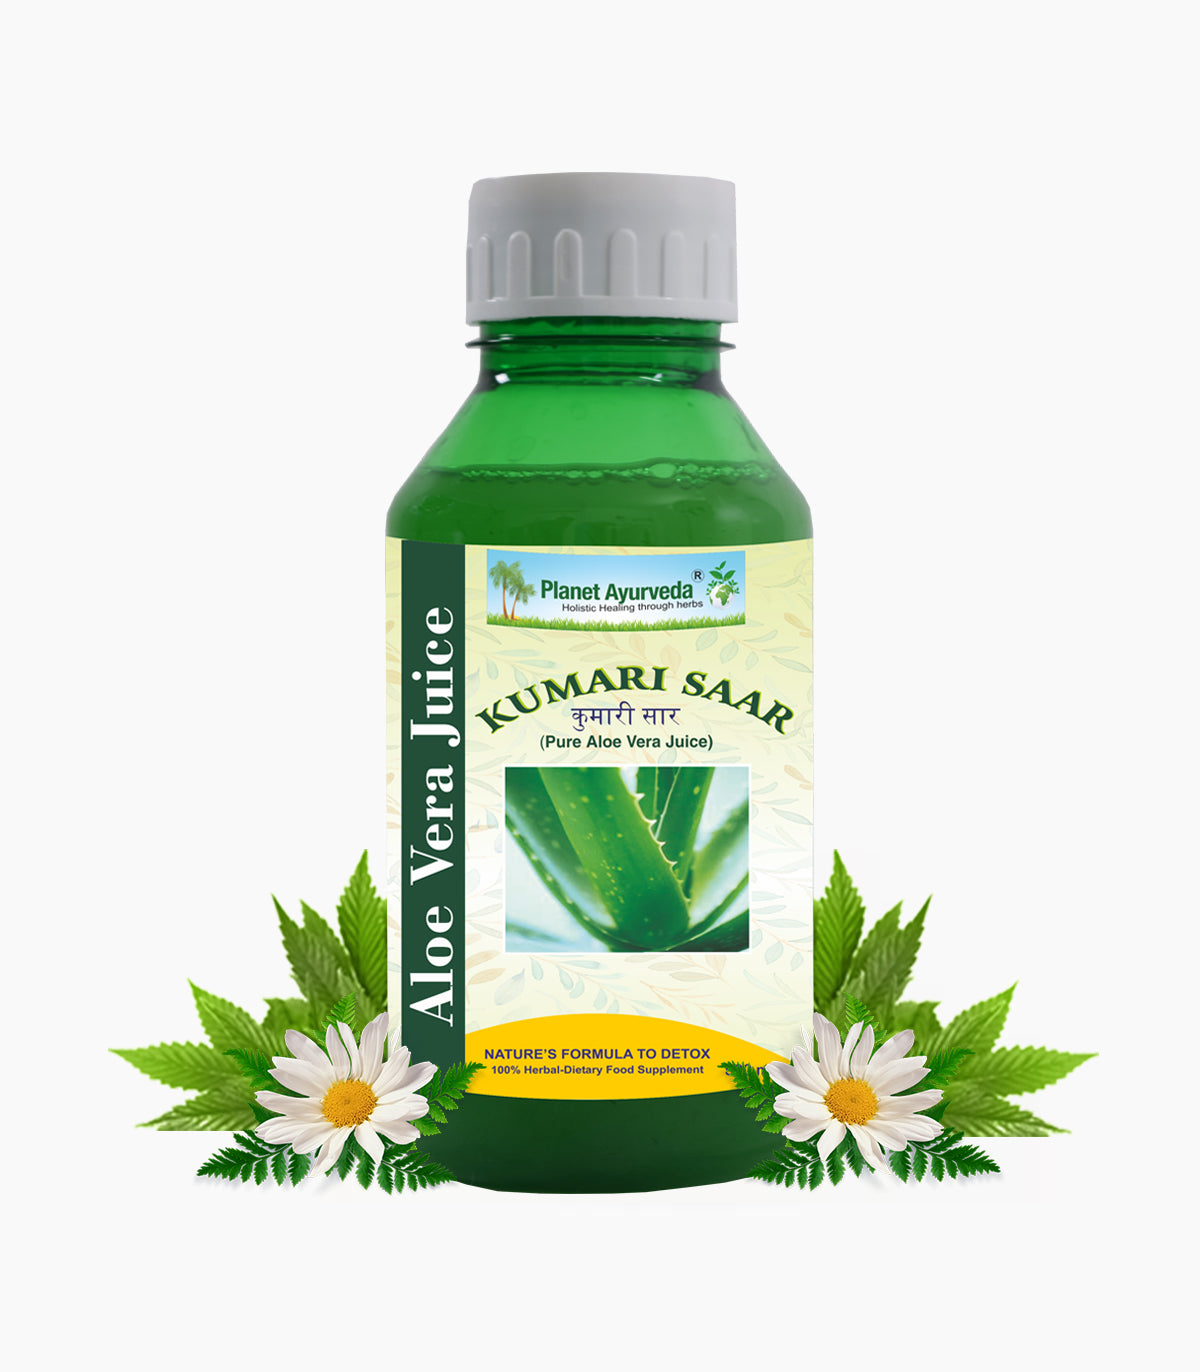 Planet Ayurveda Kumari Saar - Pure Aloe Vera Juice, Benefits and Uses